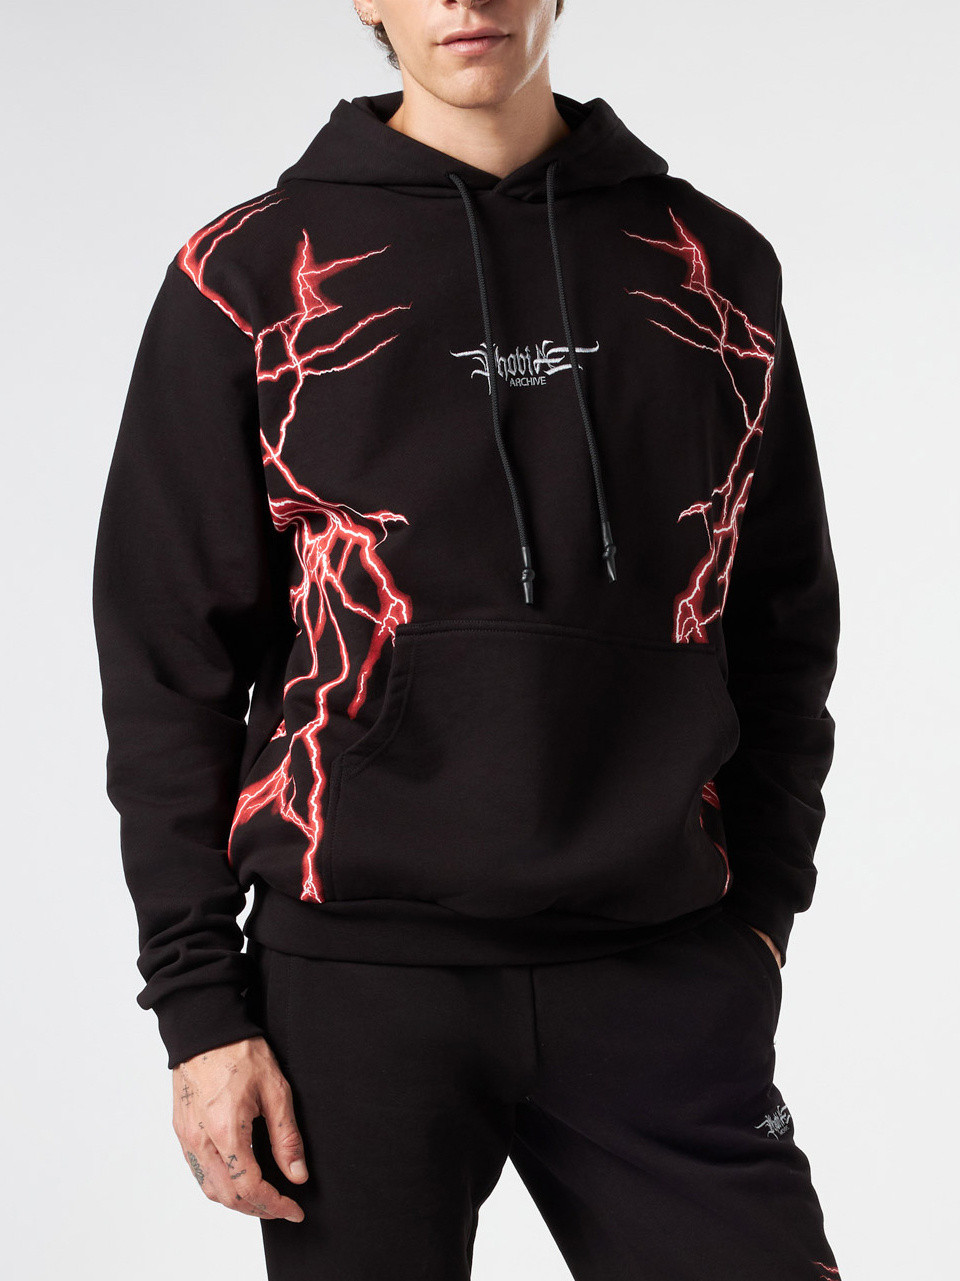 Phobia - Cotton sweatshirt with lightning print, Black, large image number 1